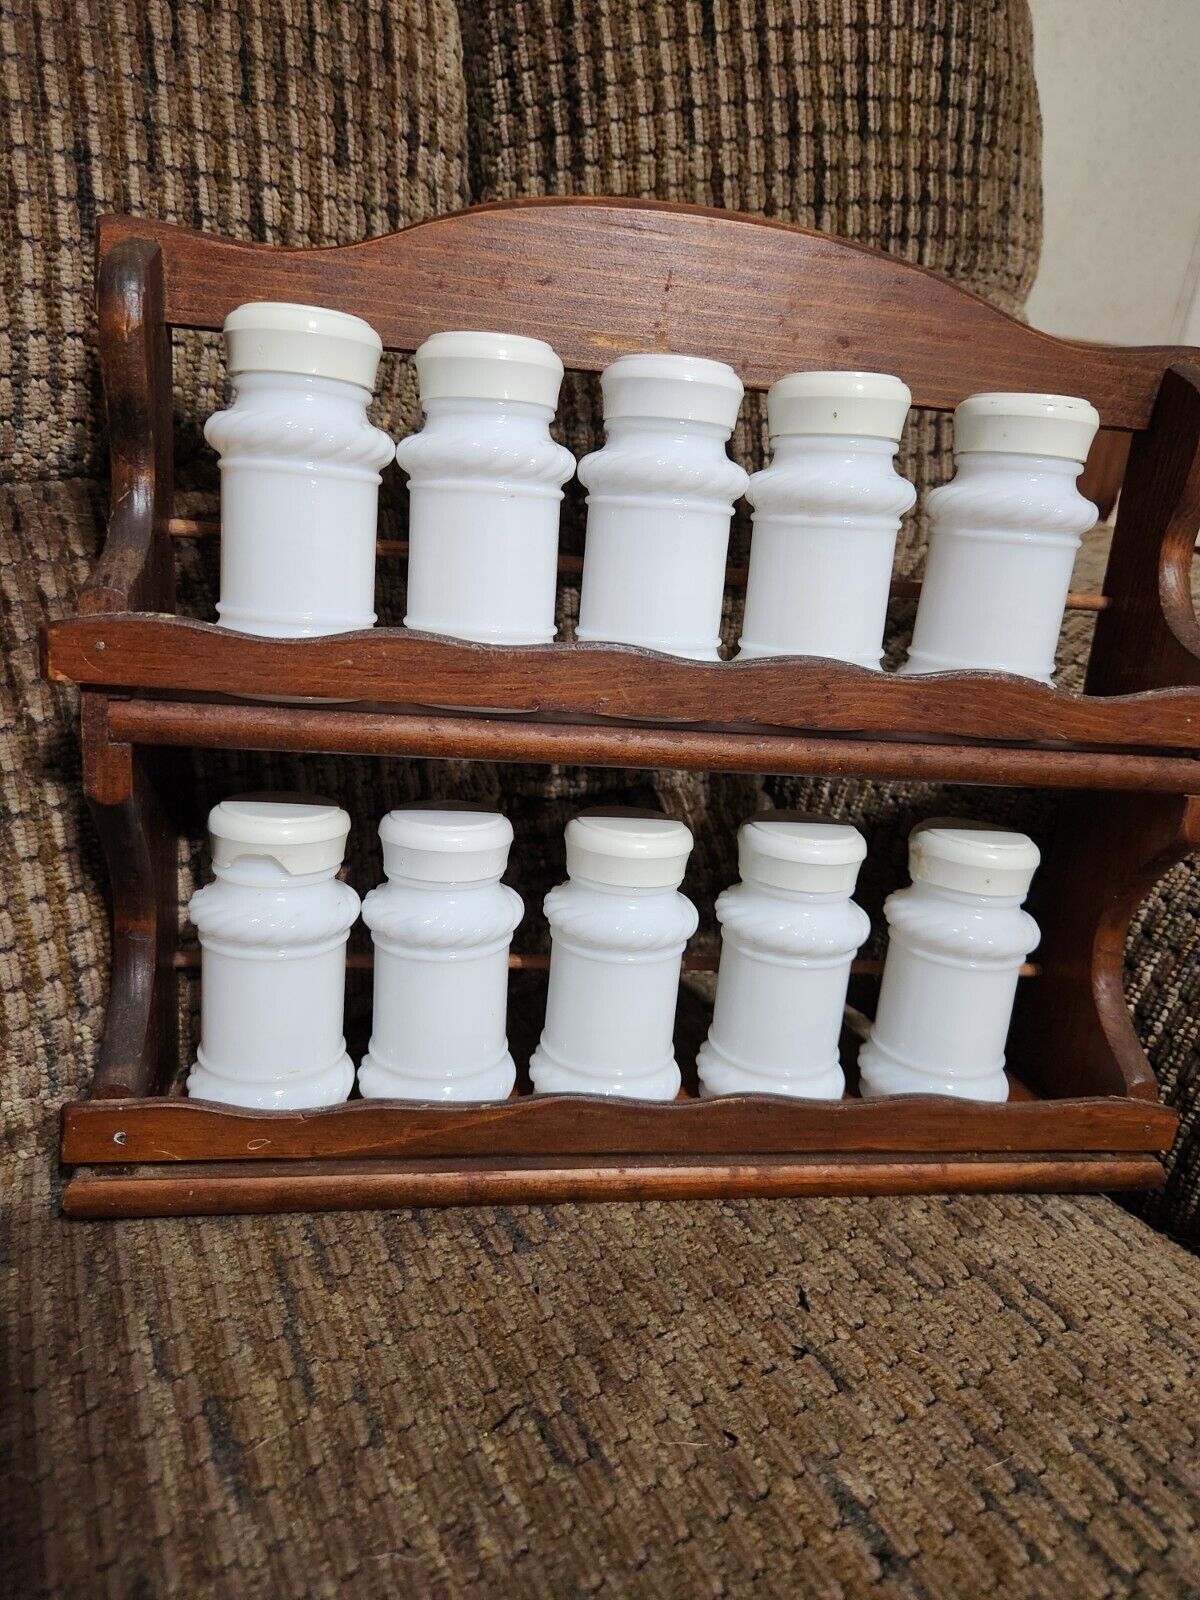 Vintage Milk Glass Spice Jar Set 2 Tier Wood Rack 10pc Jars Label Your Own Spice